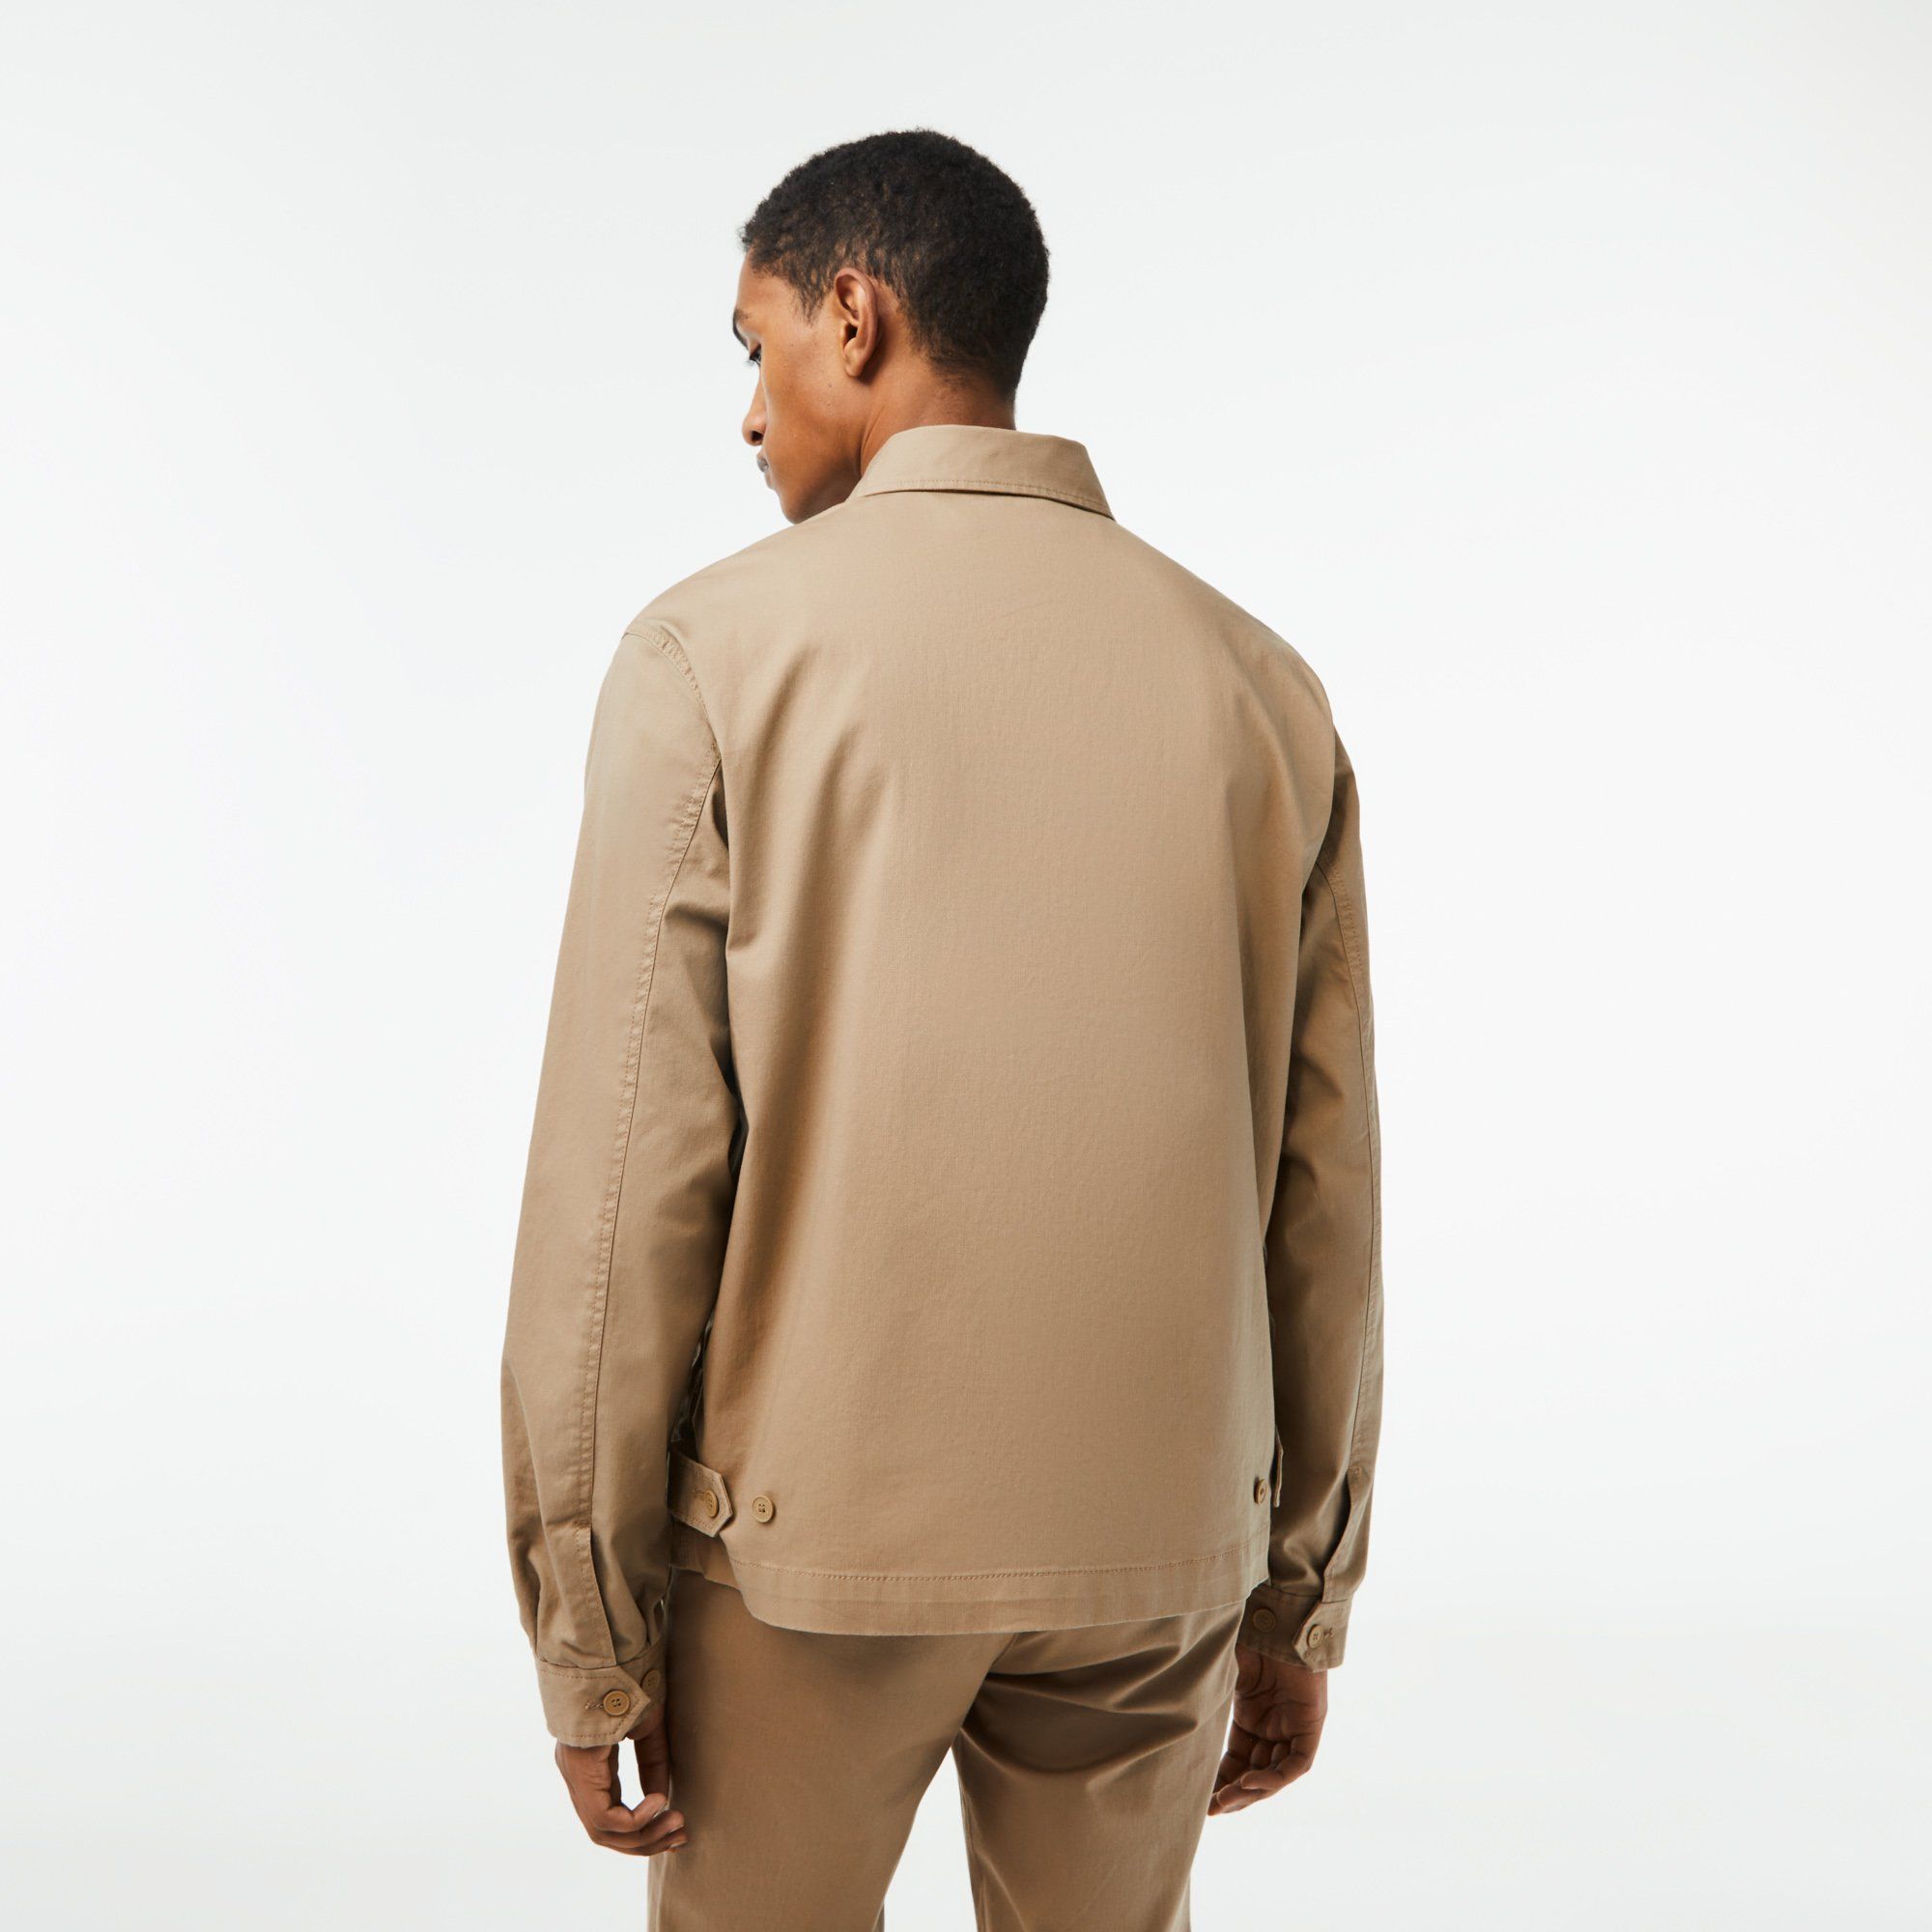  Lacoste Short Zippered Organic Cotton Gabardine Jacket - Beige 